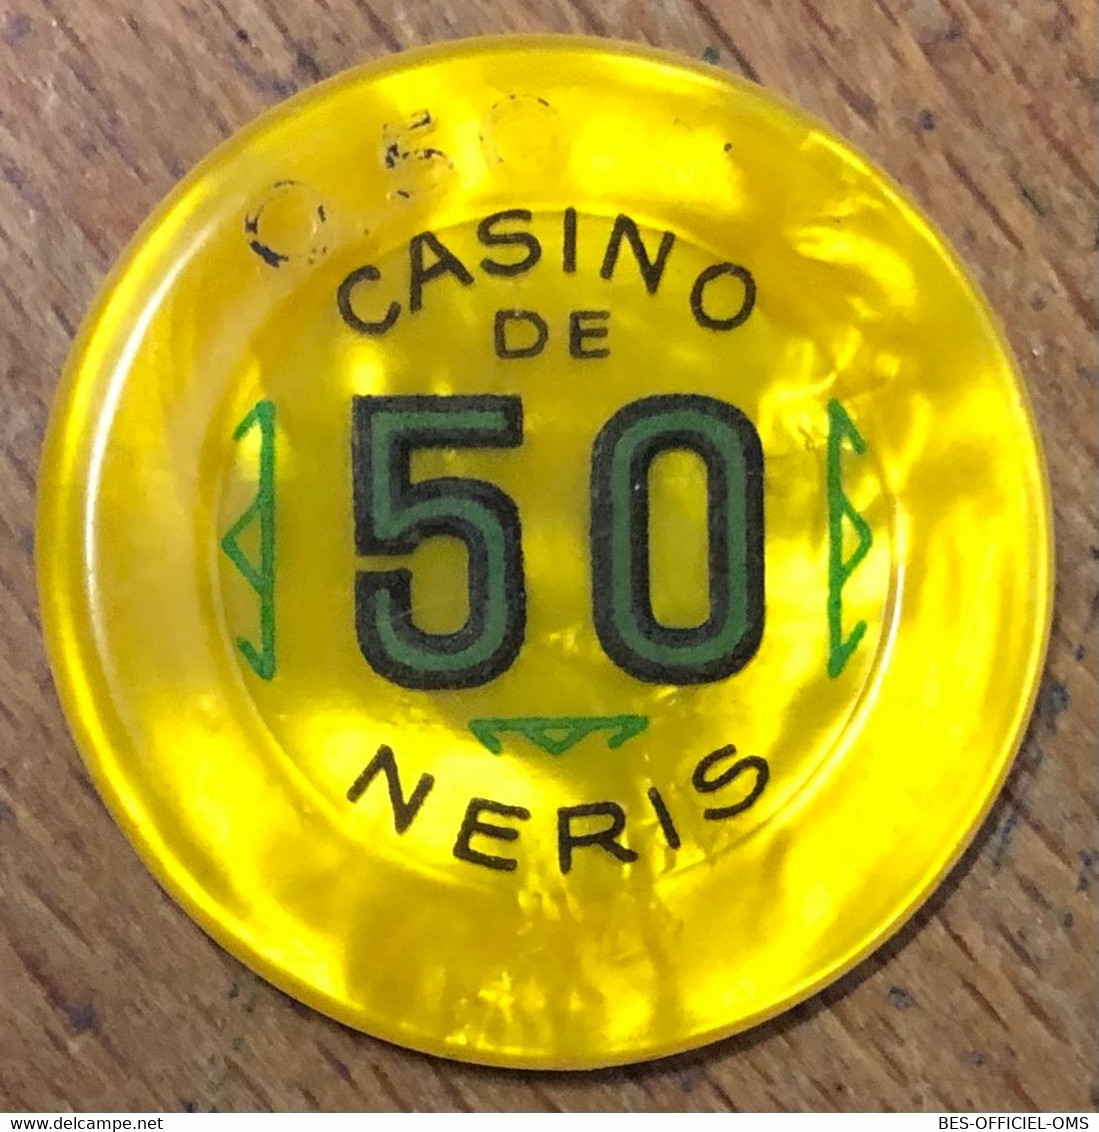 03 NÉRIS-LES-BAINS CASINO JETON DE 50 FRANCS 0,50 NF N° 01839 CHIP COINS TOKENS GAMING - Casino